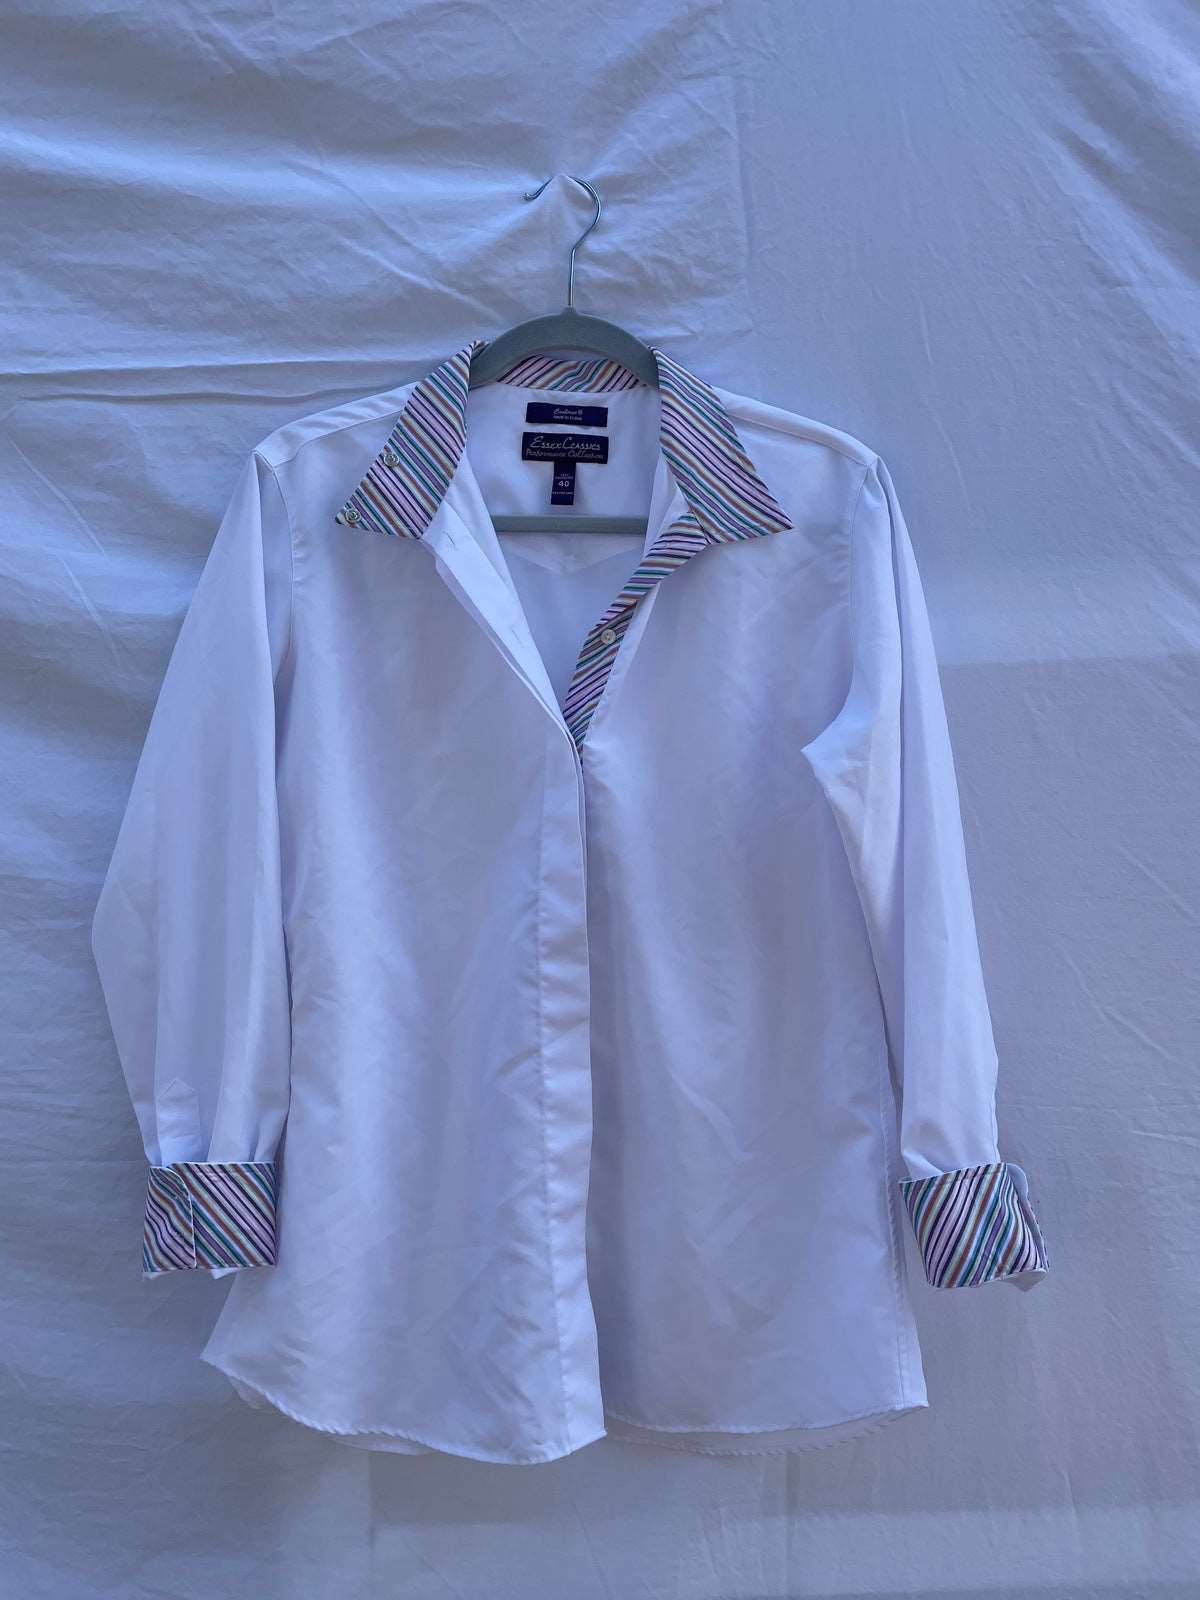 ThriftedEquestrian Clothing 40 Essex Show Shirt - Size 40